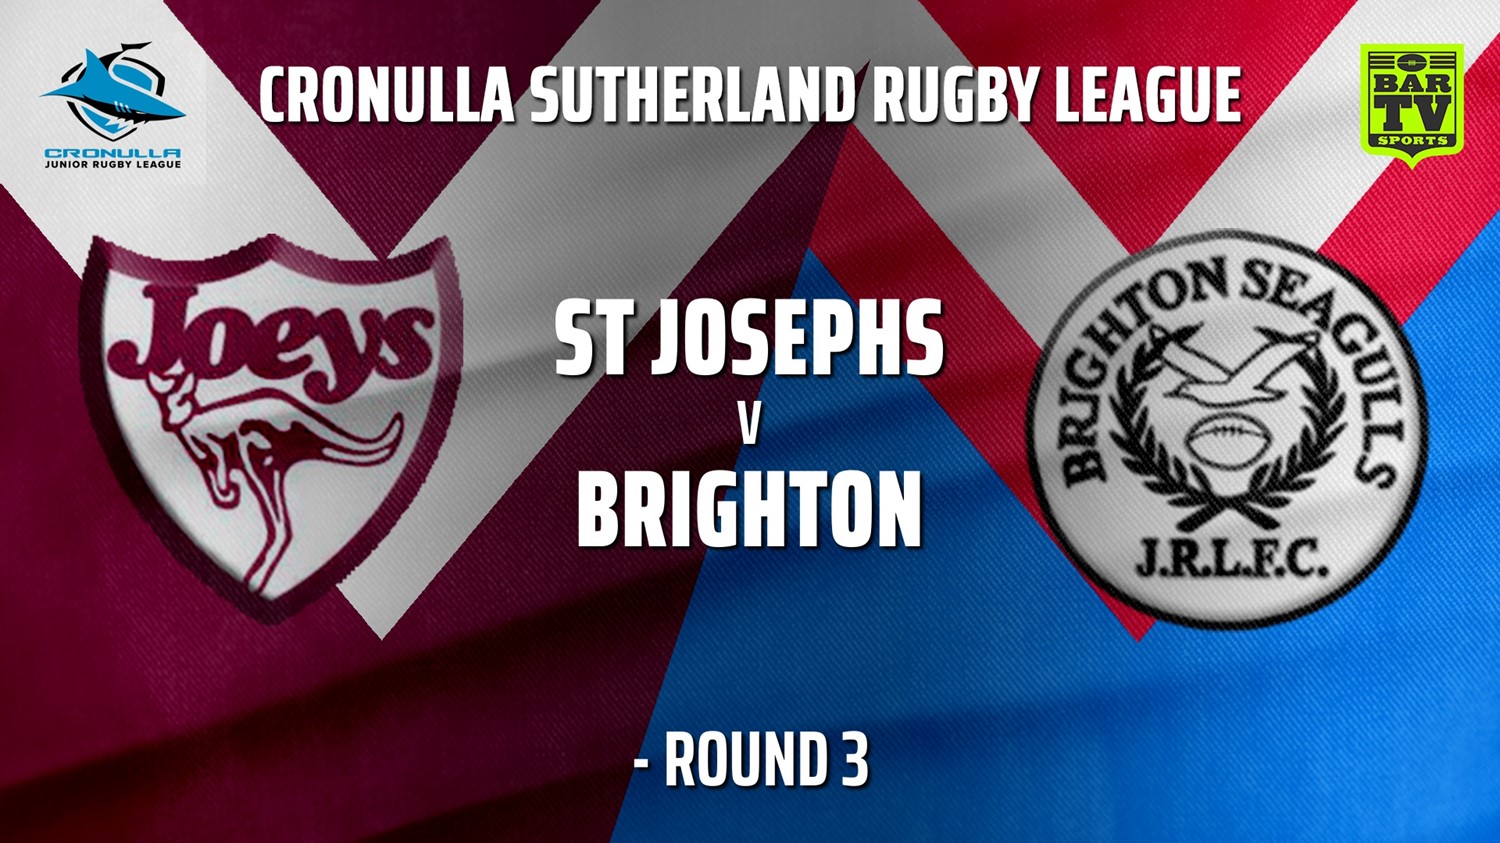 210515-Cronulla JRL - Southern Under 13s Gold -  Round 3 - St Josephs v Brighton Seagulls Slate Image